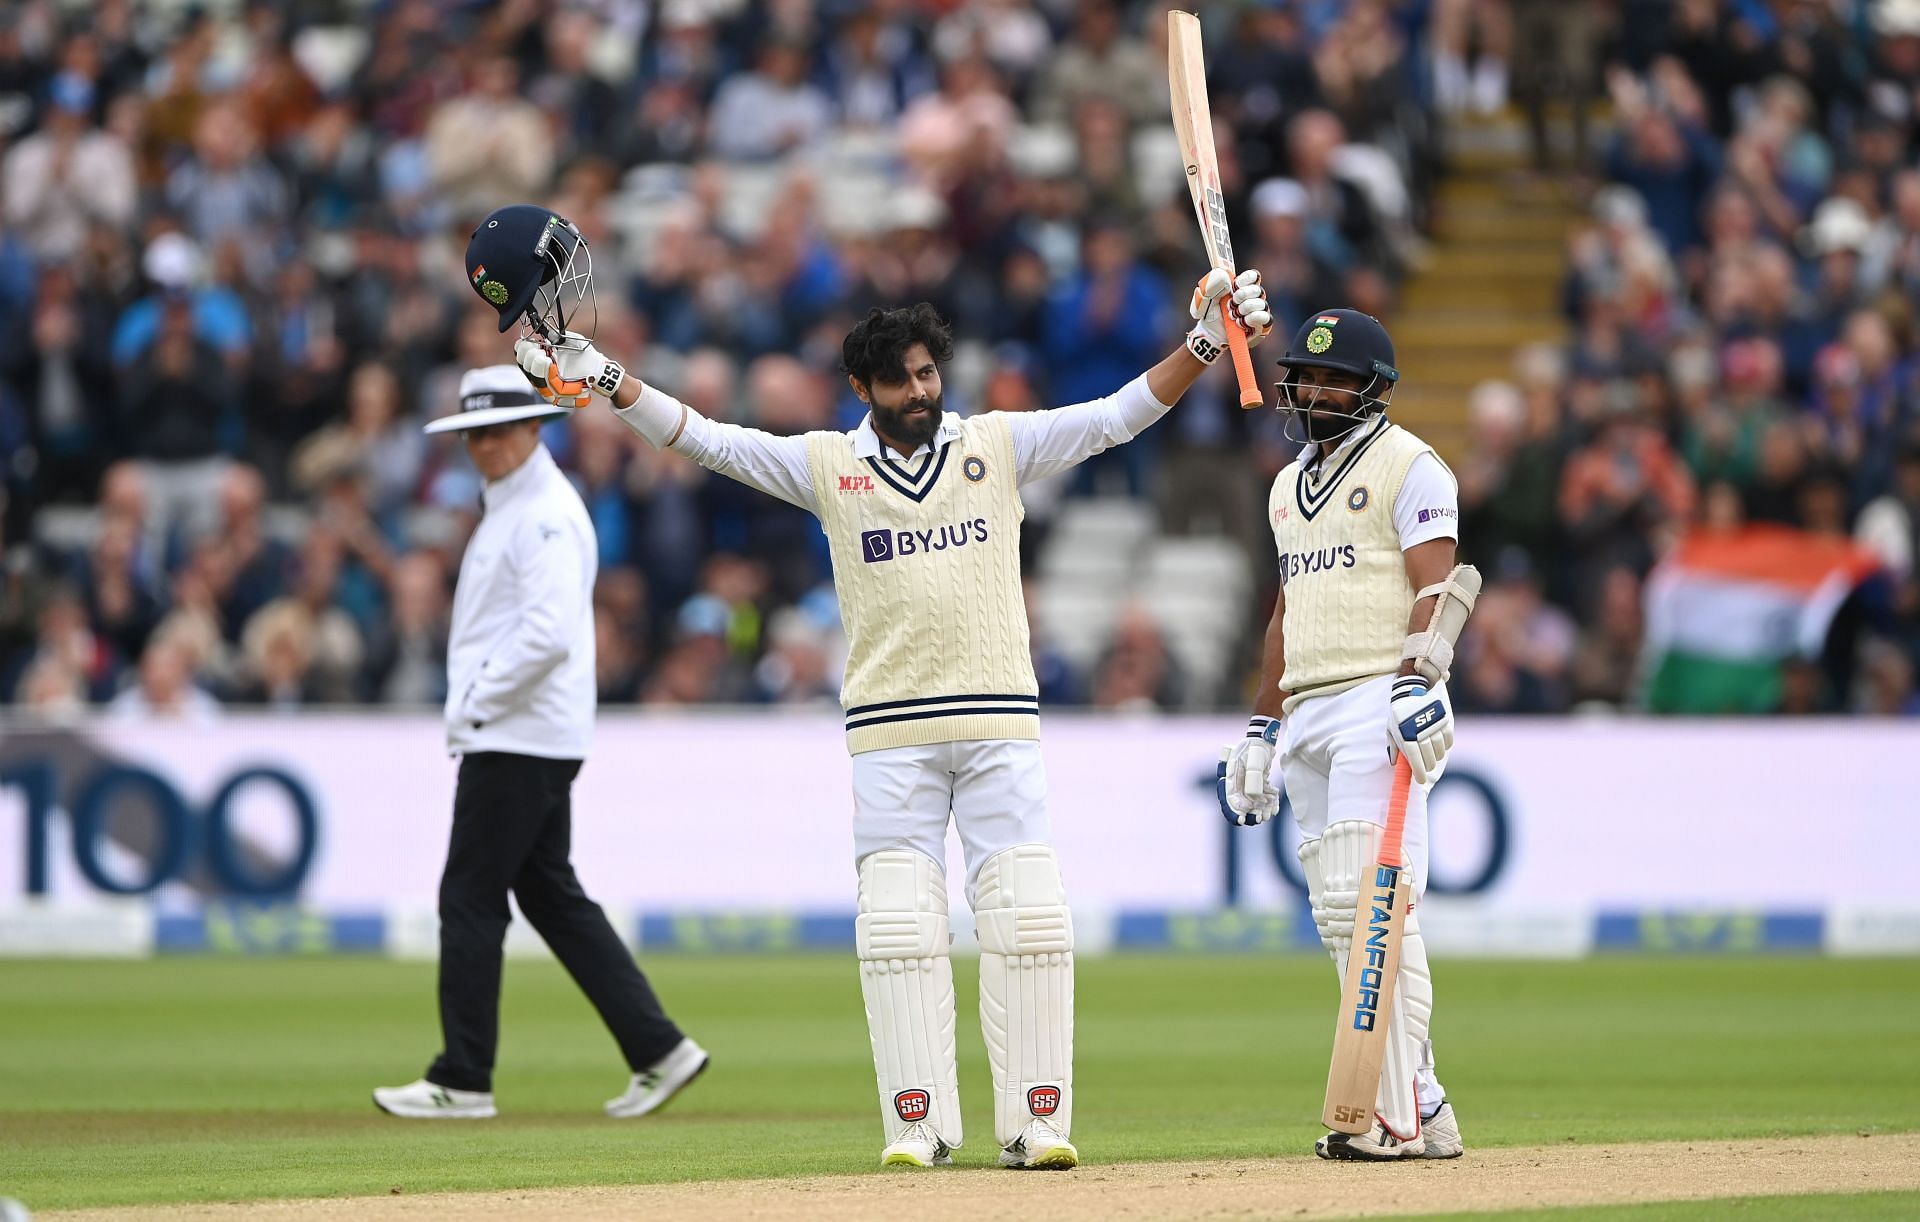 Ravindra Jadeja scored his first Test century away from home